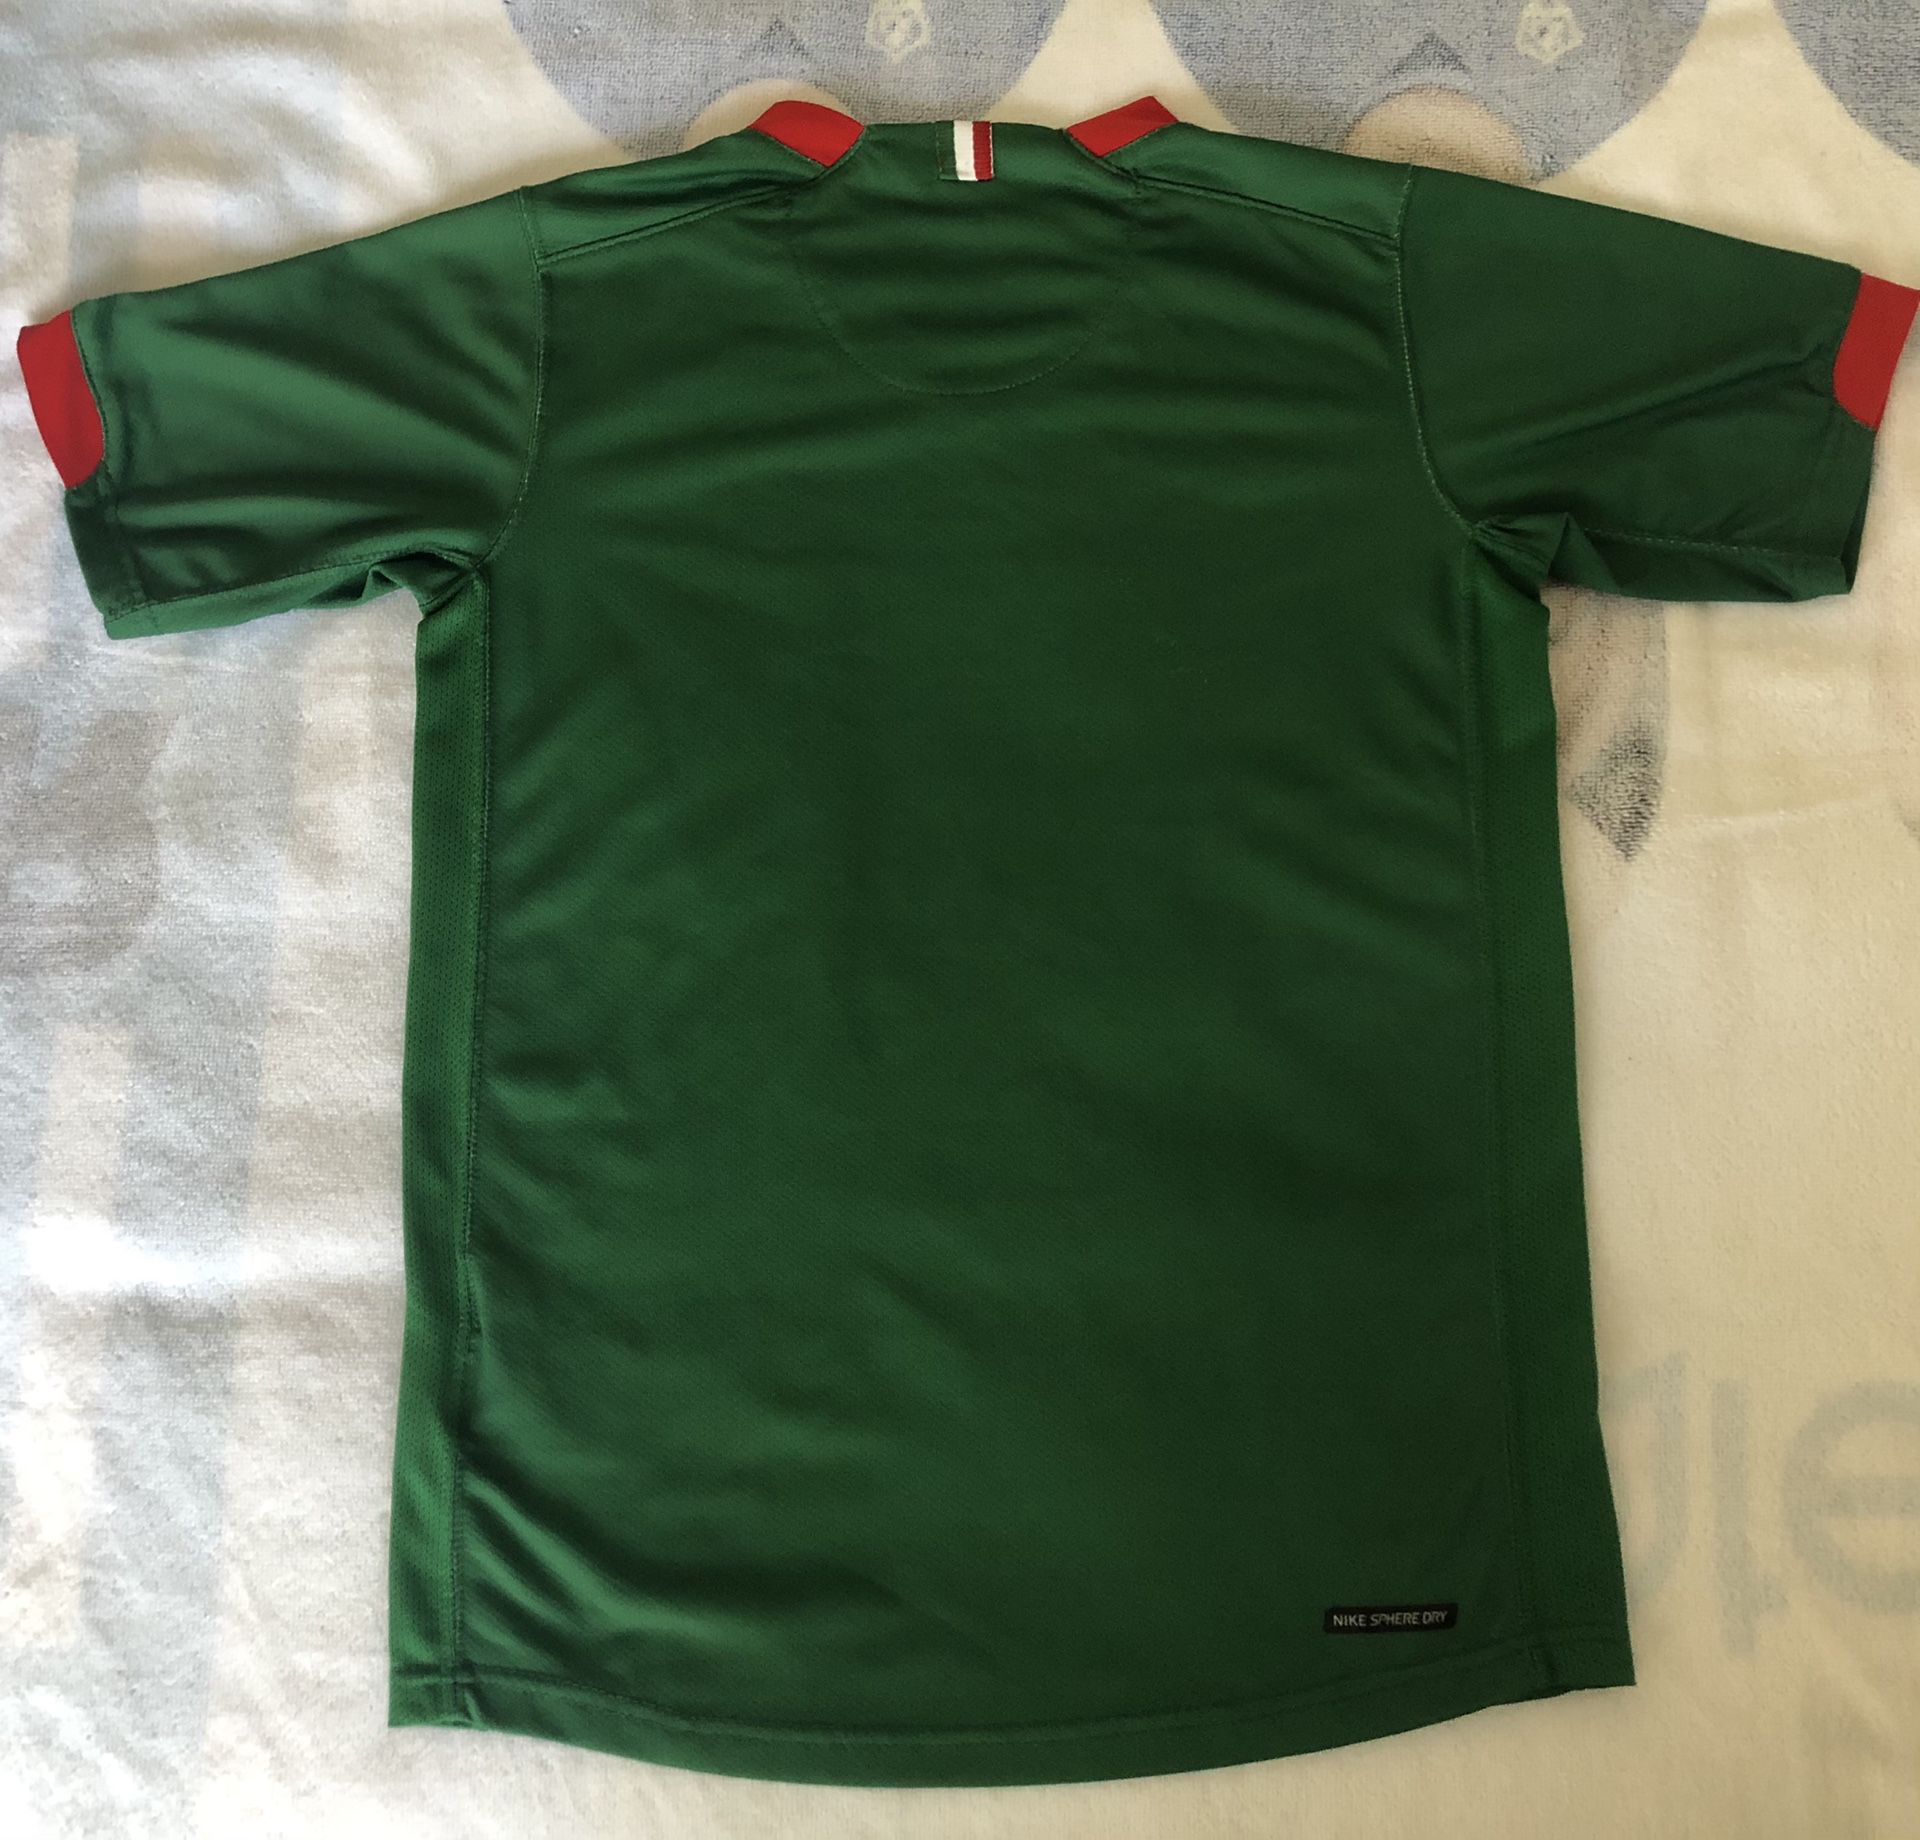 Vintage NIKE CLUB AMERICA liga MX soccer jersey shirt 2001 for Sale in  Hacienda Heights, CA - OfferUp